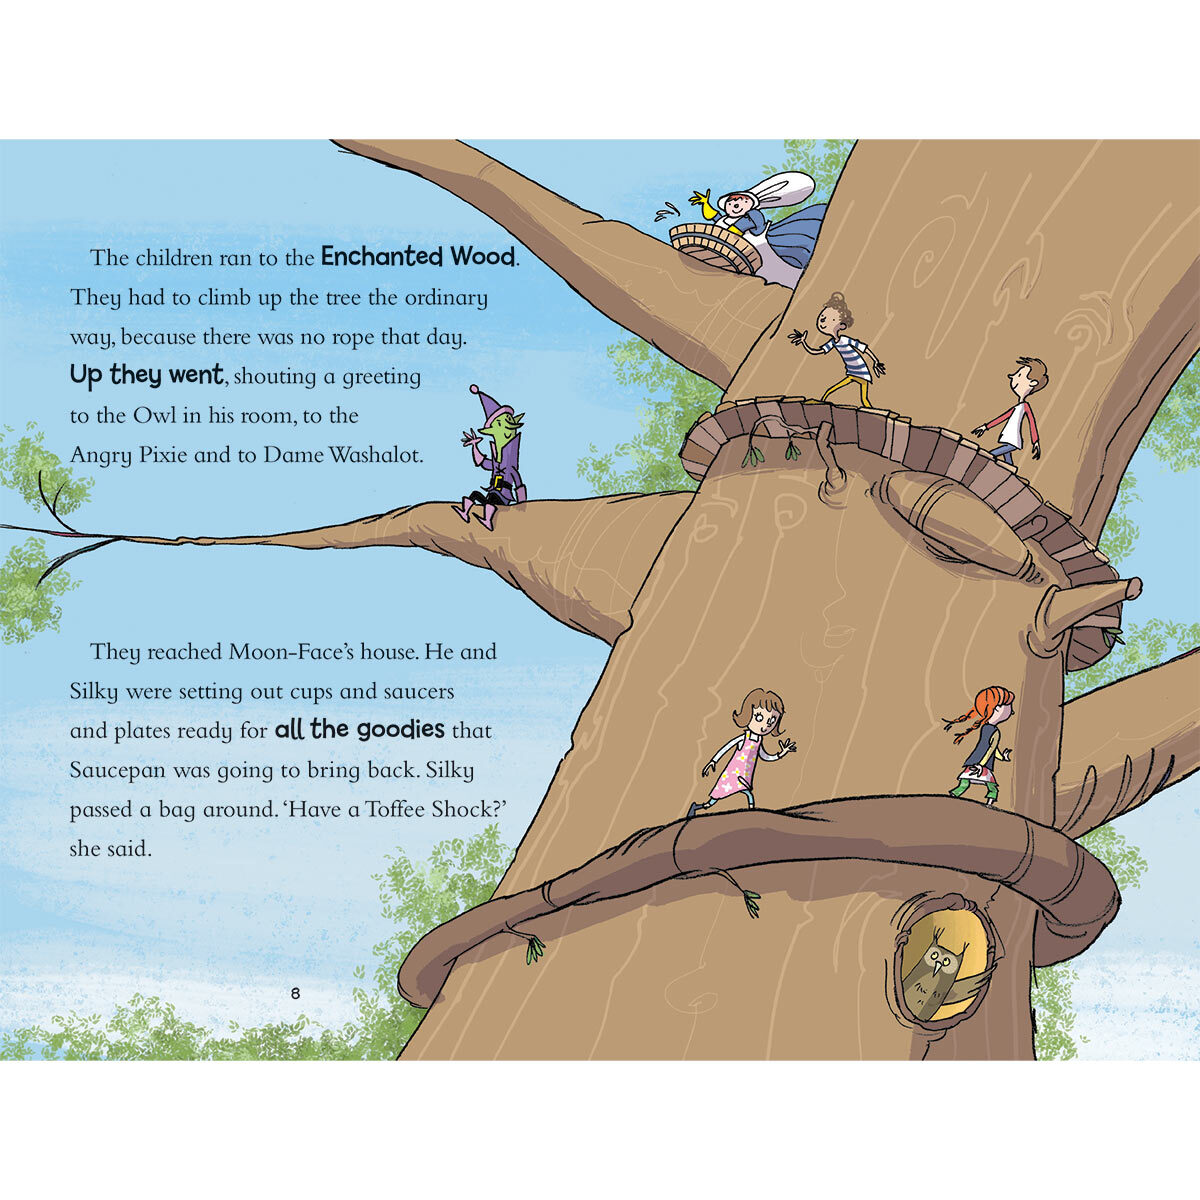 The Faraway Tree Adventures 8 Book Boxset, Enid Blyton (5+ Years)